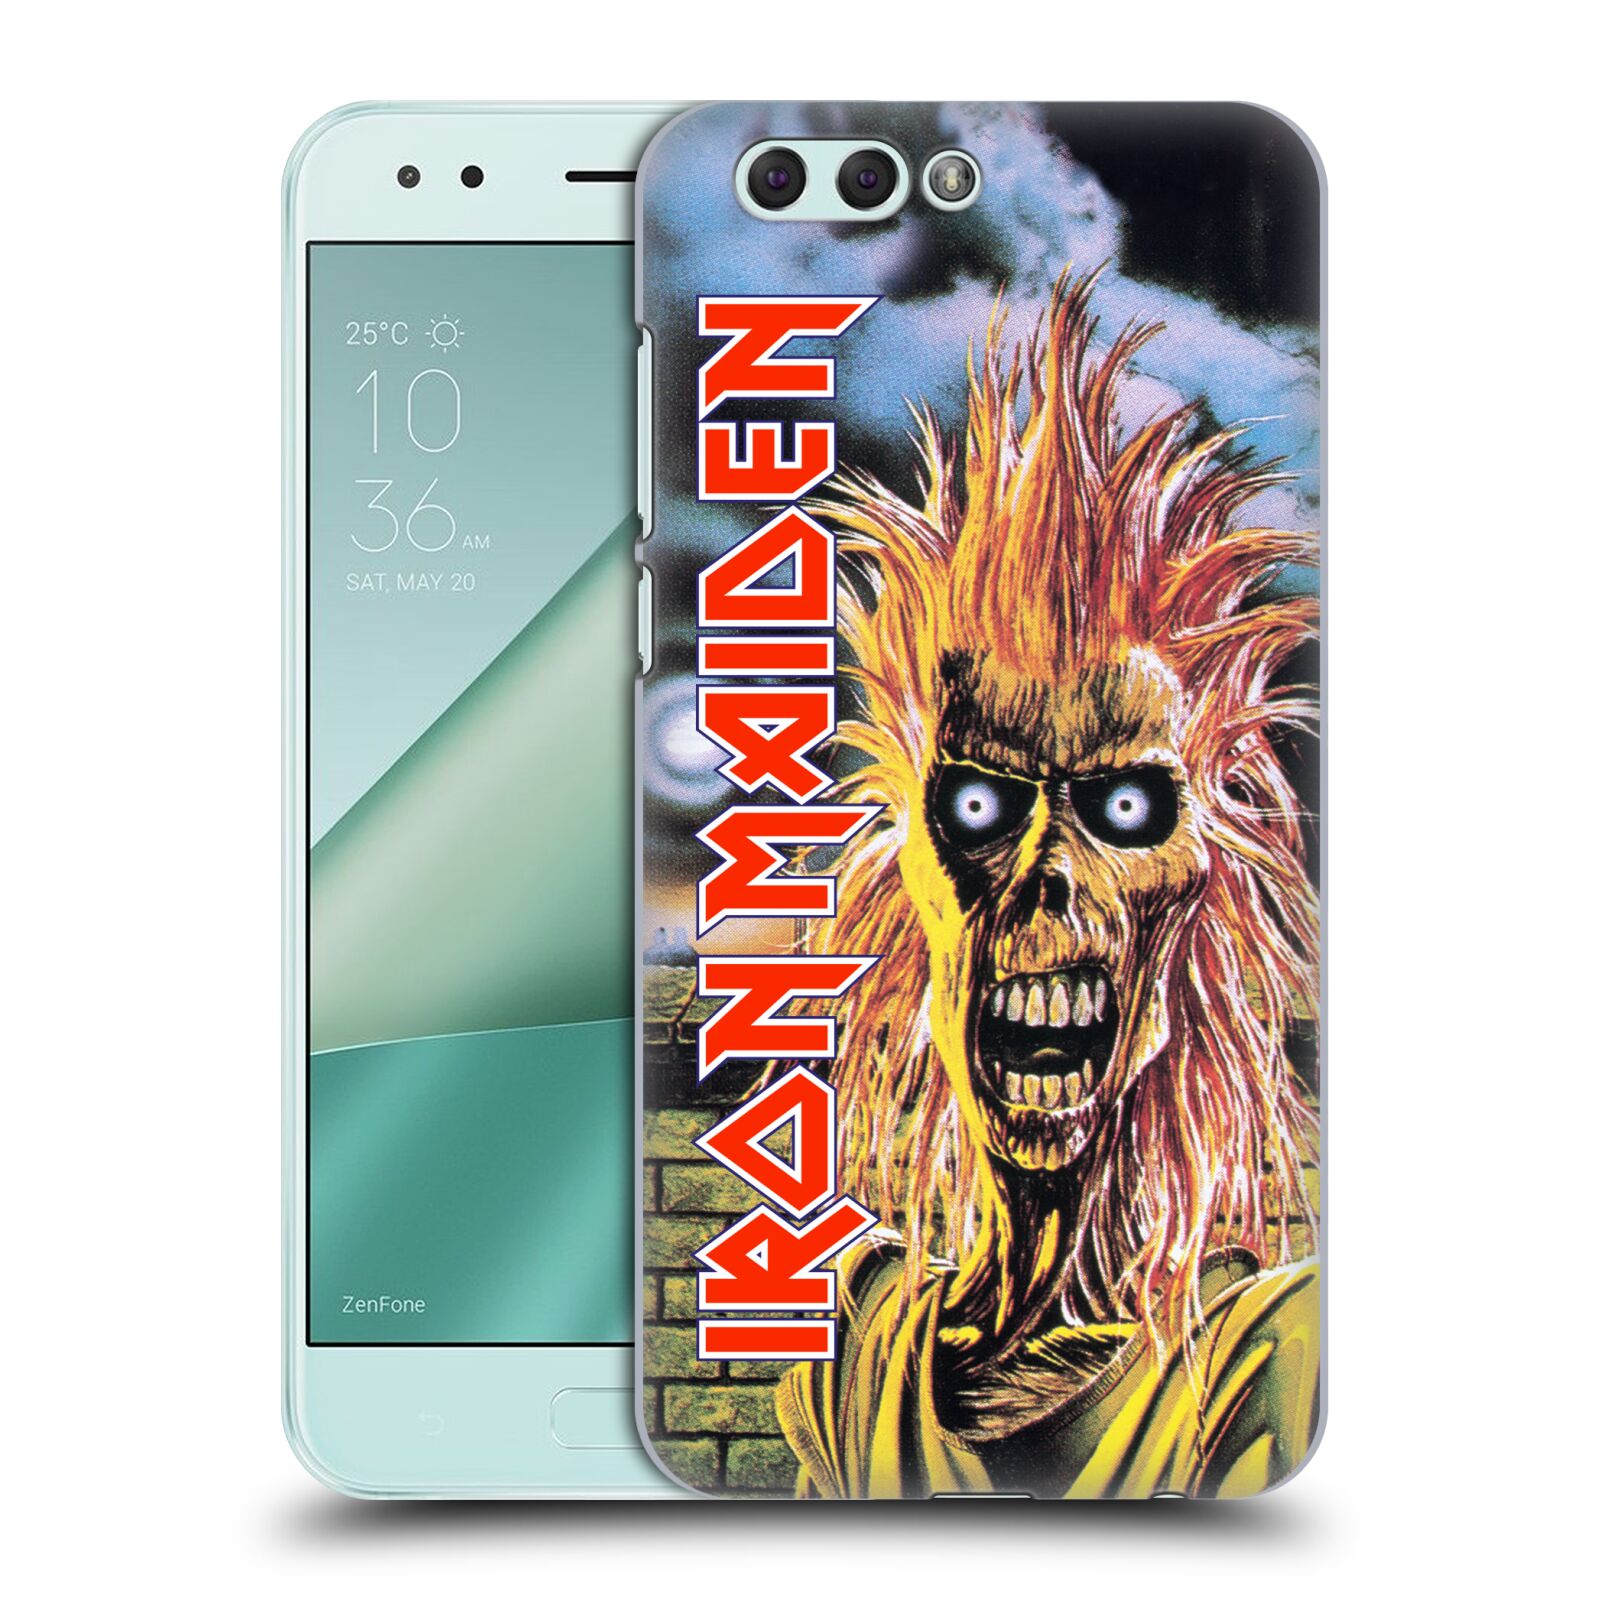 HEAD CASE plastový obal na mobil Asus Zenfone 4 ZE554KL Heavymetalová skupina Iron Maiden punker